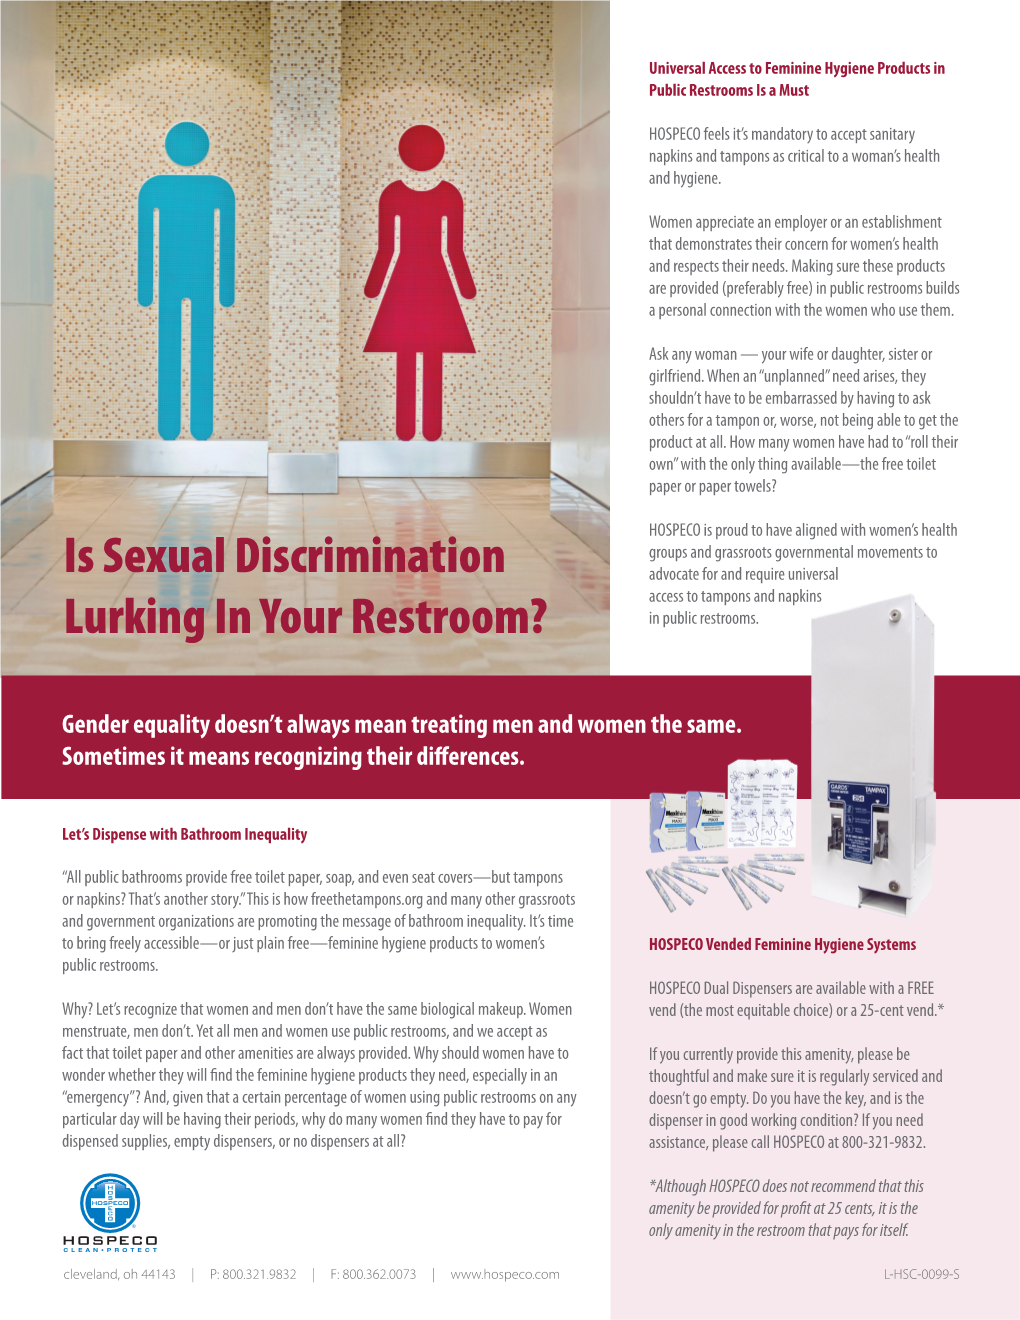 Is Sexual Discrimination Lurking in Your Restroom?